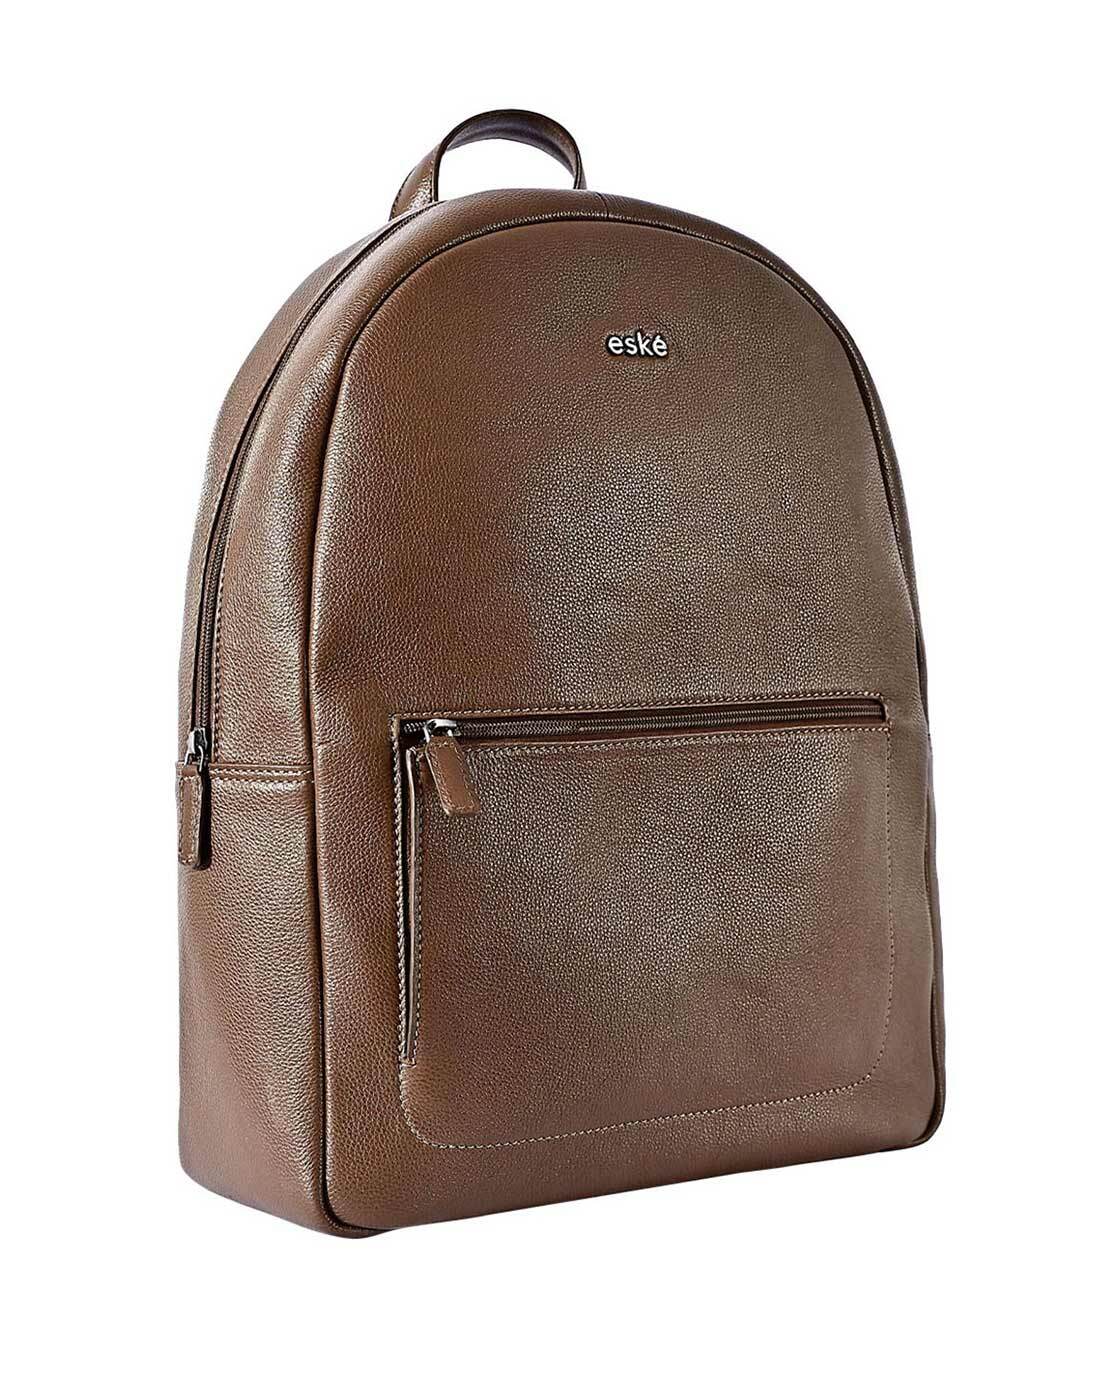 MultiSack Tan Backpack Purse | Tan backpack, Backpack purse, Purses